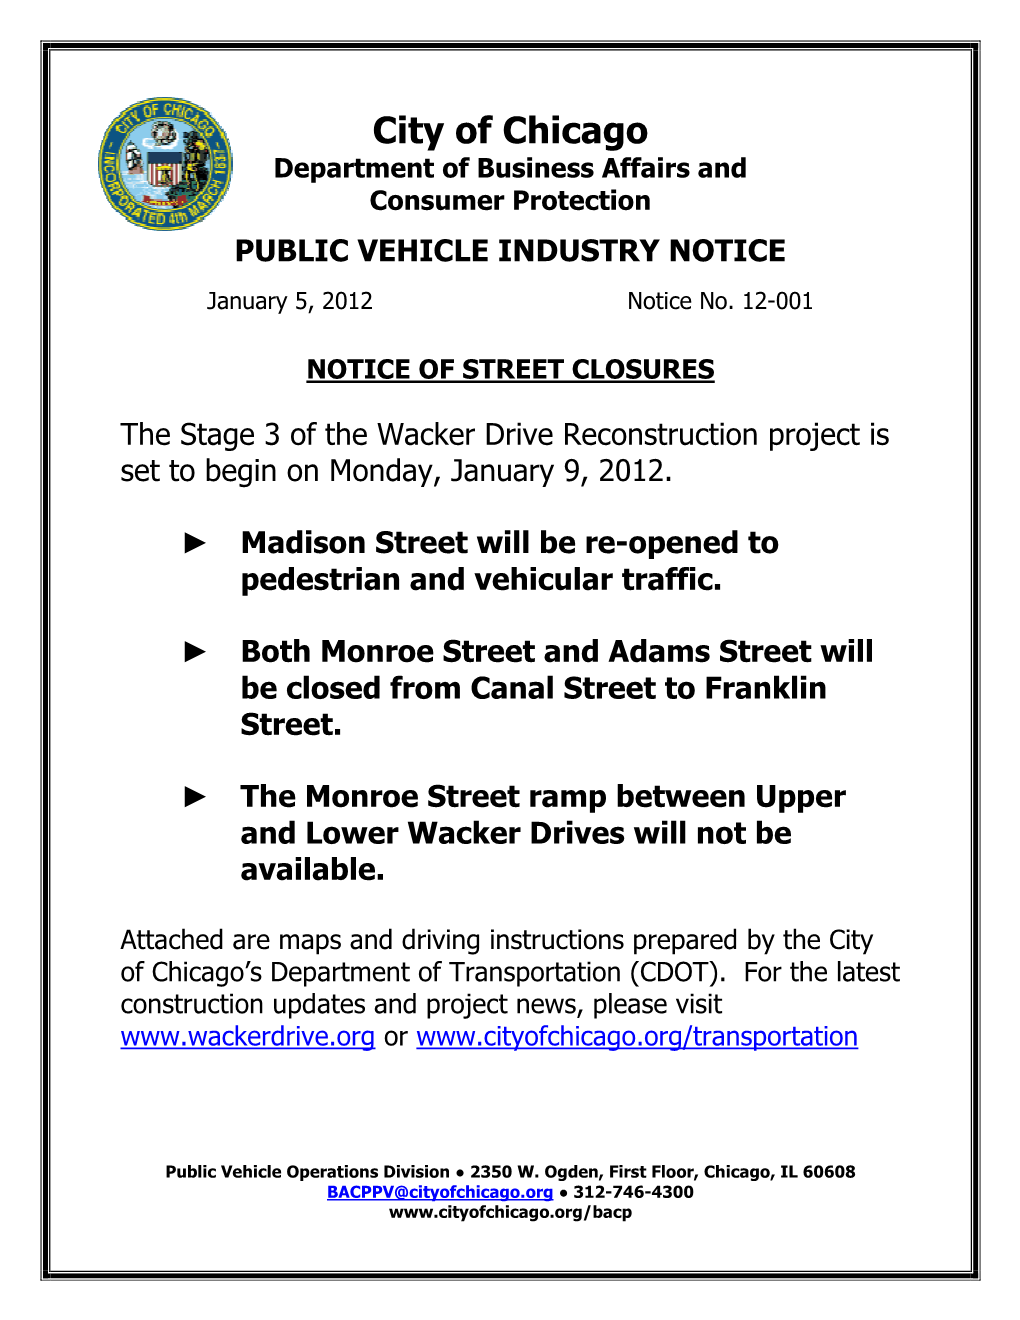 Wacker Drive South Viaduct Reconstruction Project Stage 3 - Monroe Street to Adams Street (January, 2012 - July, 2012) 1